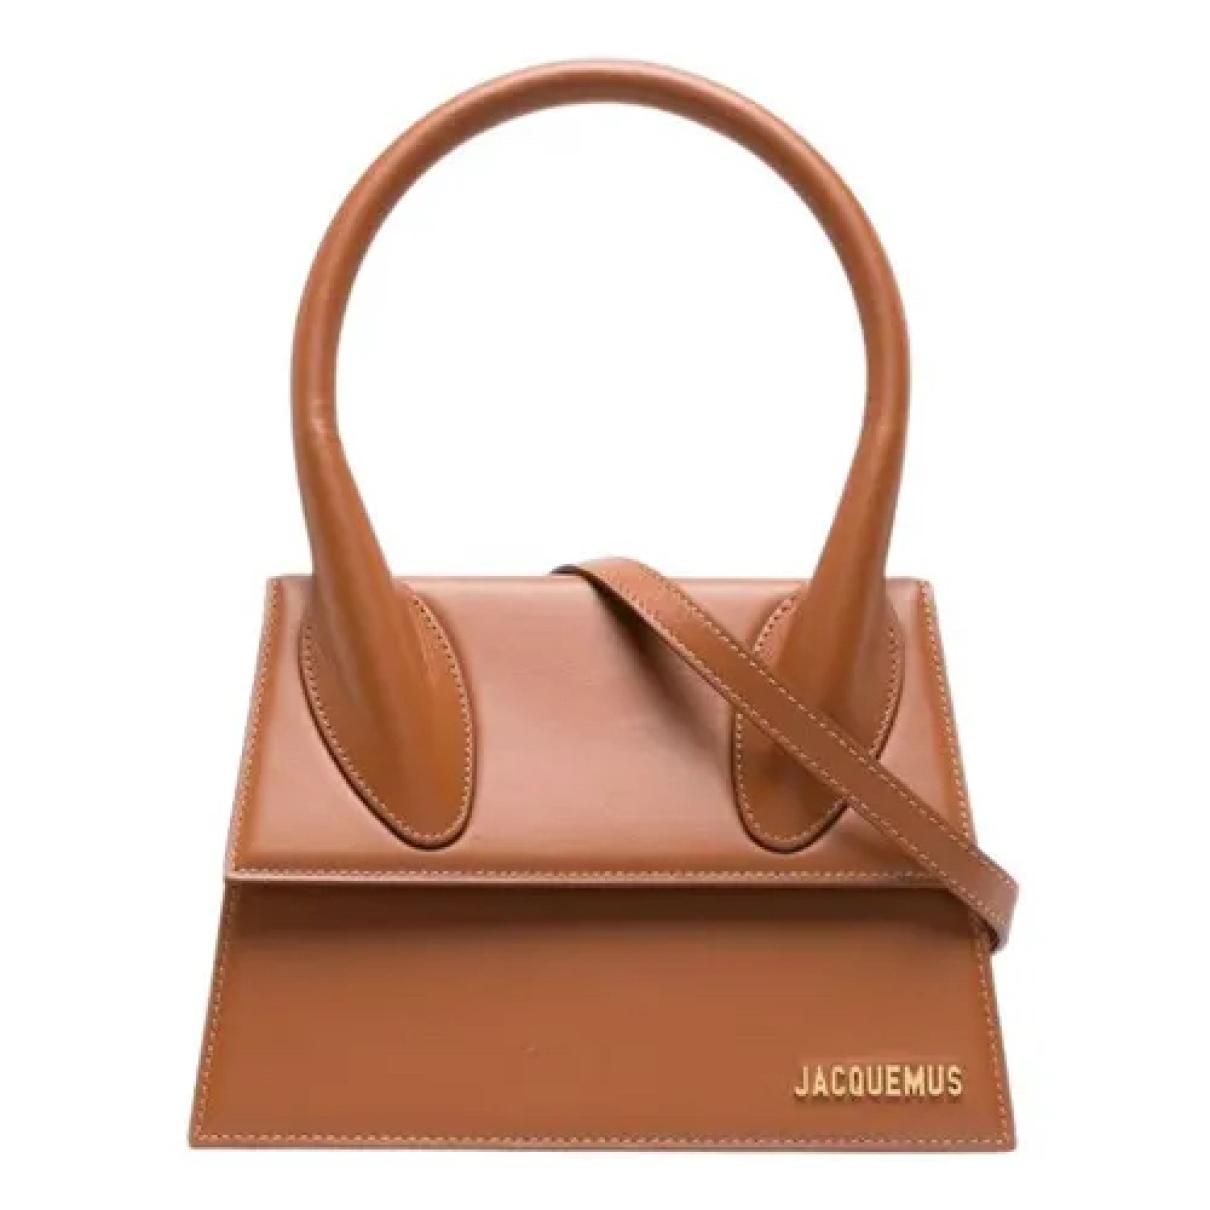 Chiquito leather handbag - 2